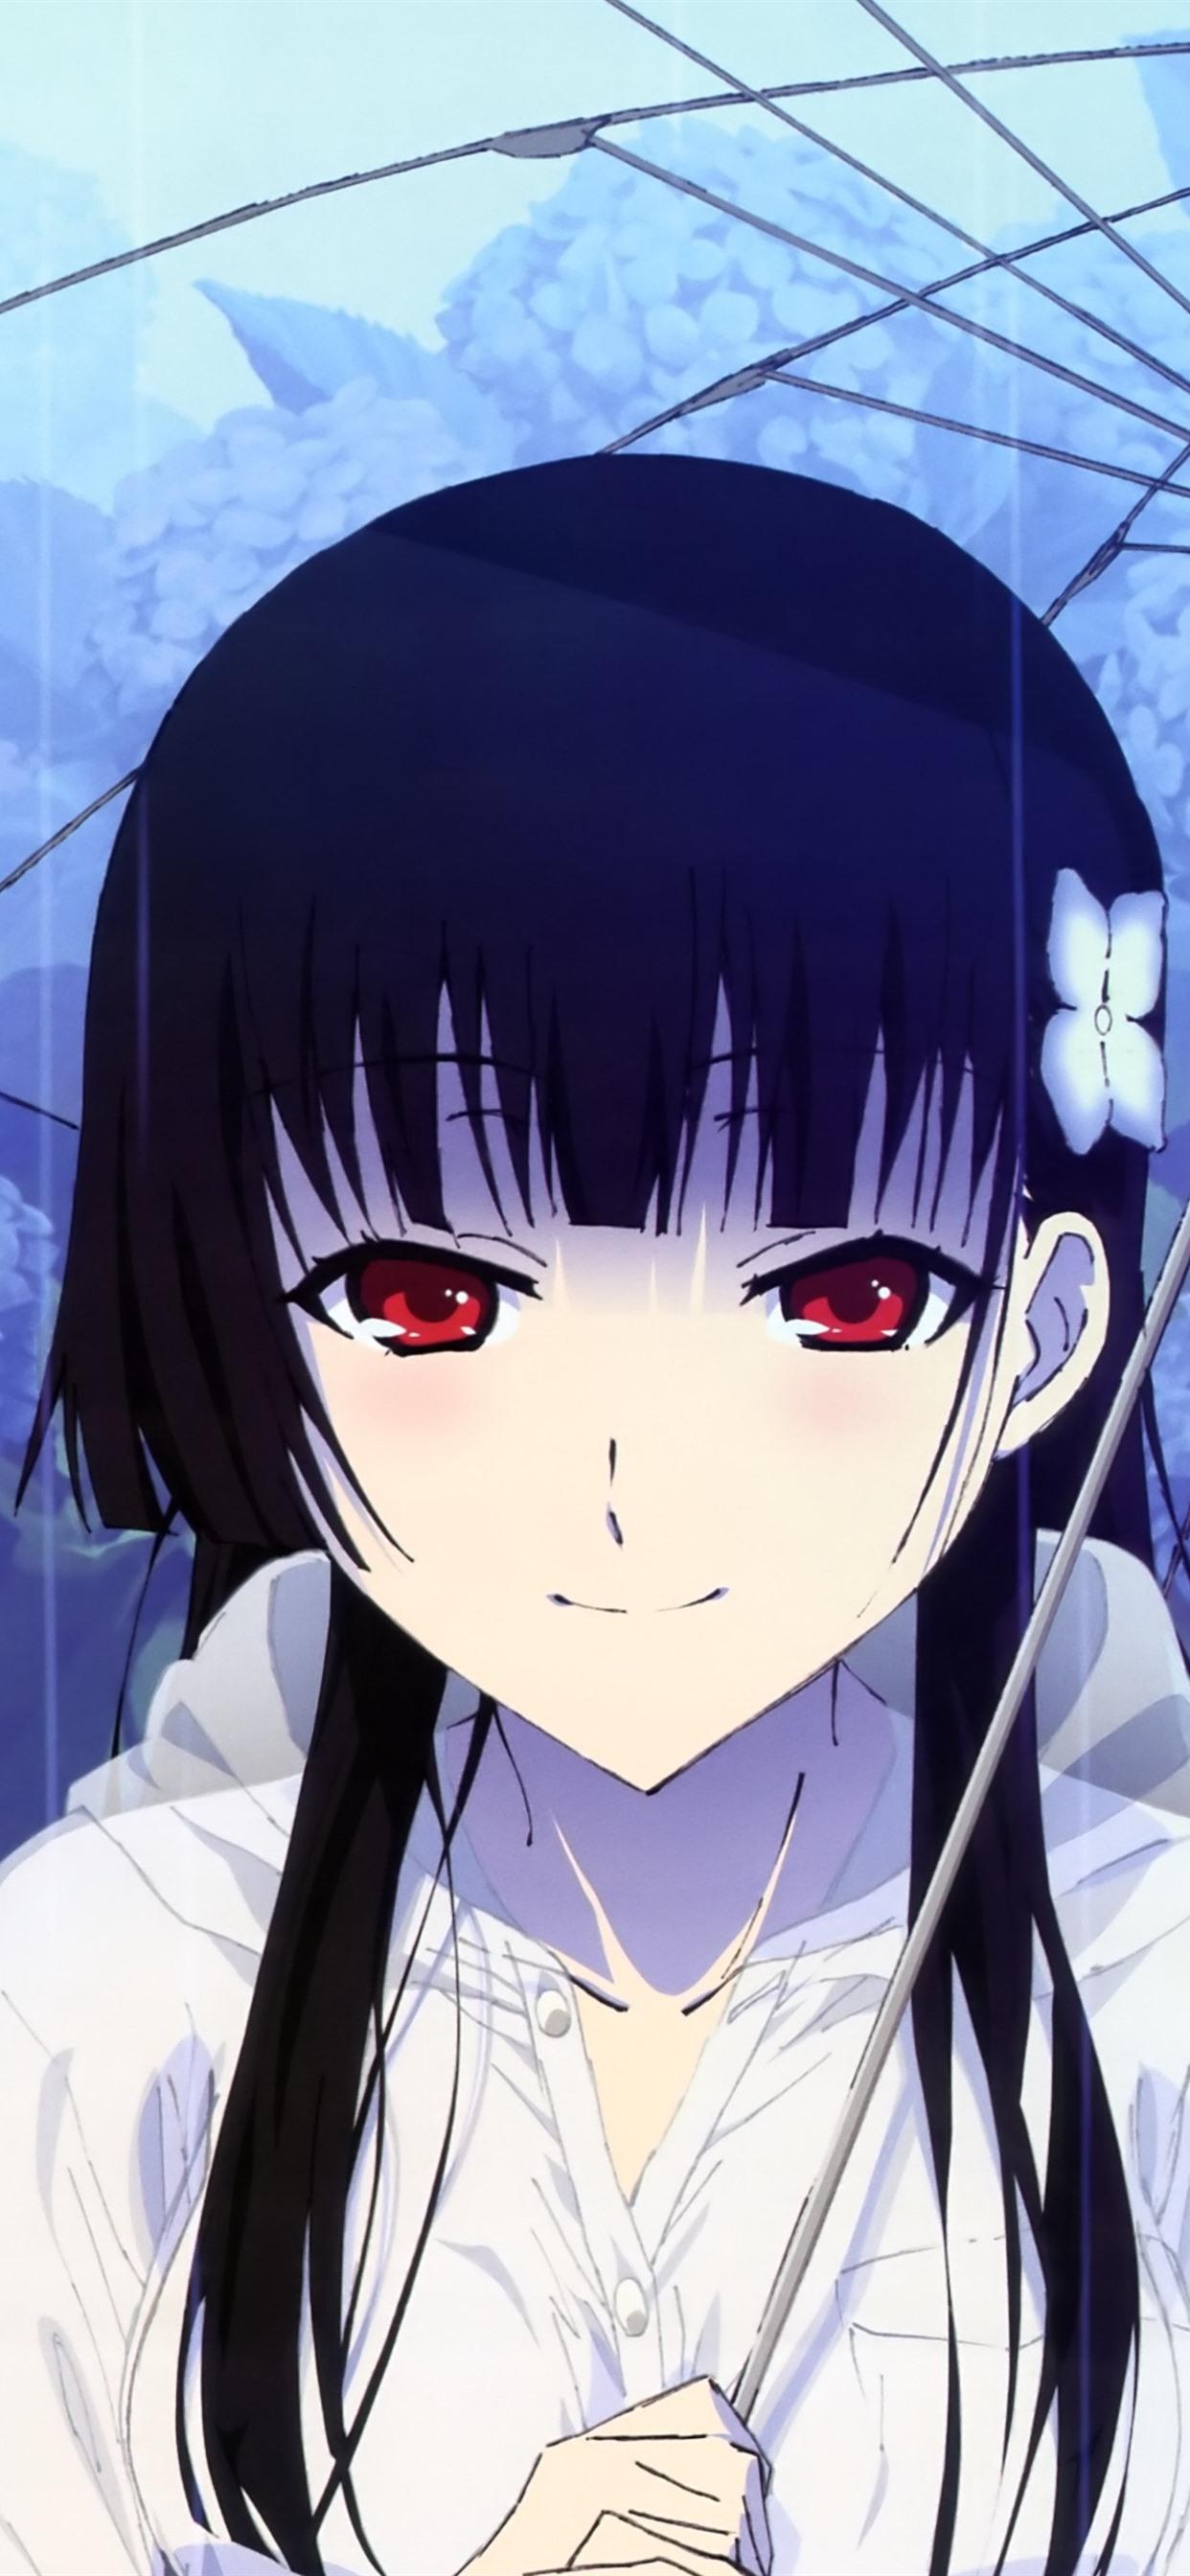 Anime Beaming Red Eyes - Brown Anime Eyes In Red Scarf - Drawings